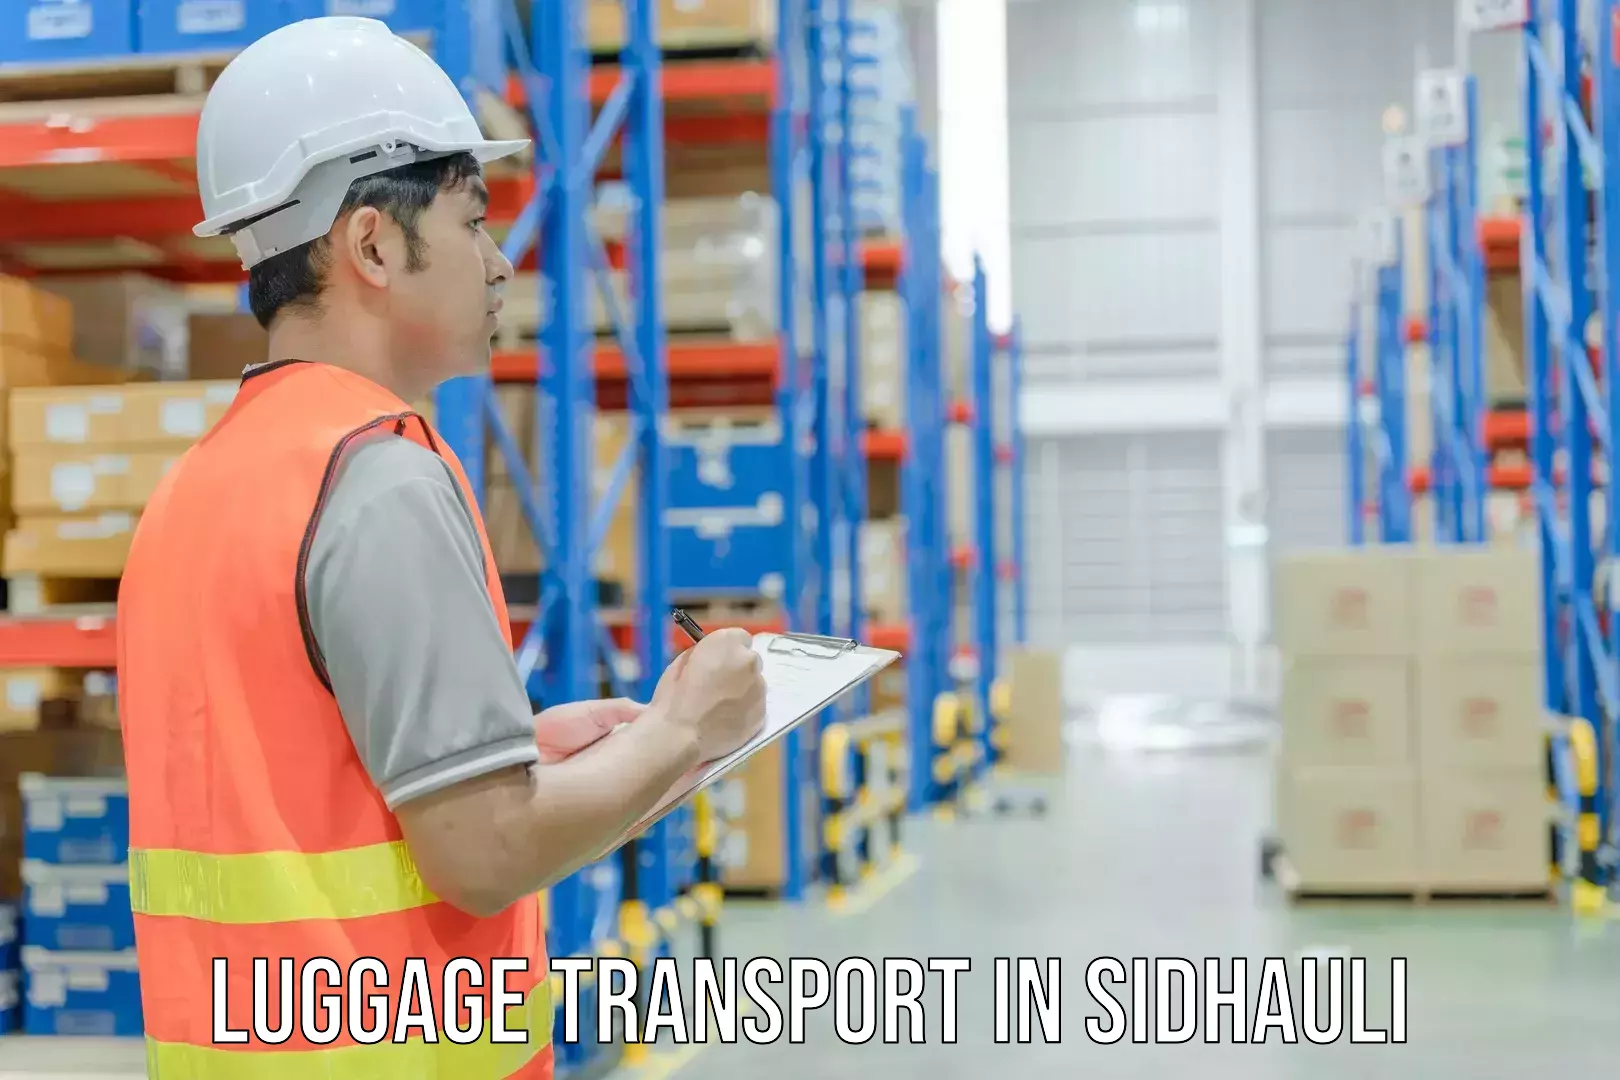 Luggage transport service in Sidhauli